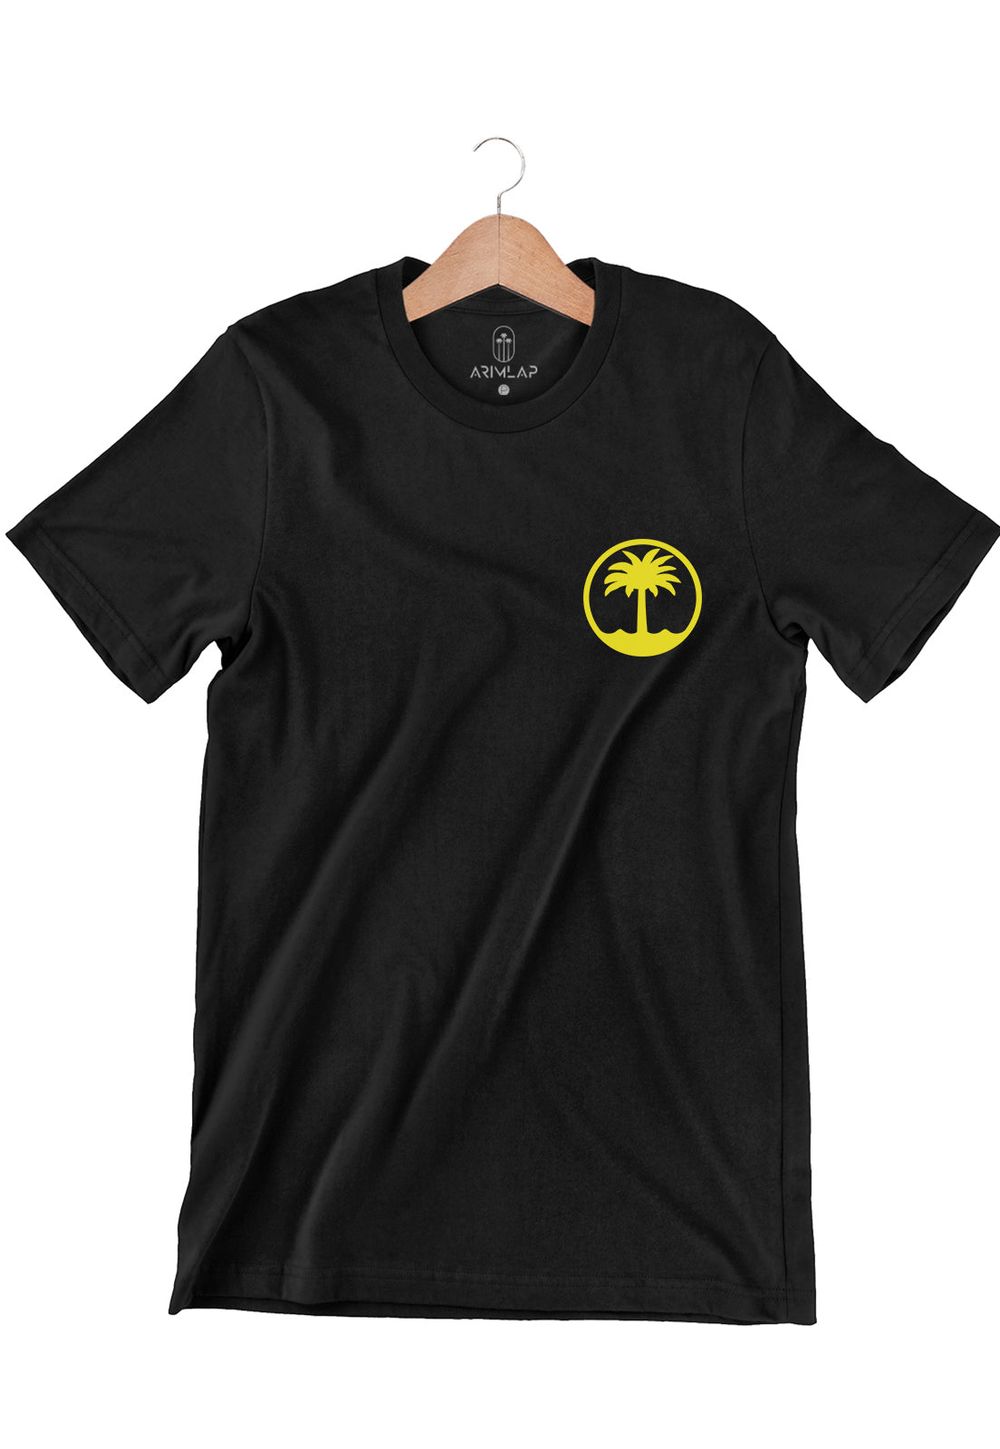 Camiseta Arimlap Paraiso Do Sul Preto Cor:Preto;Tamanho:P;Genero:Masculino